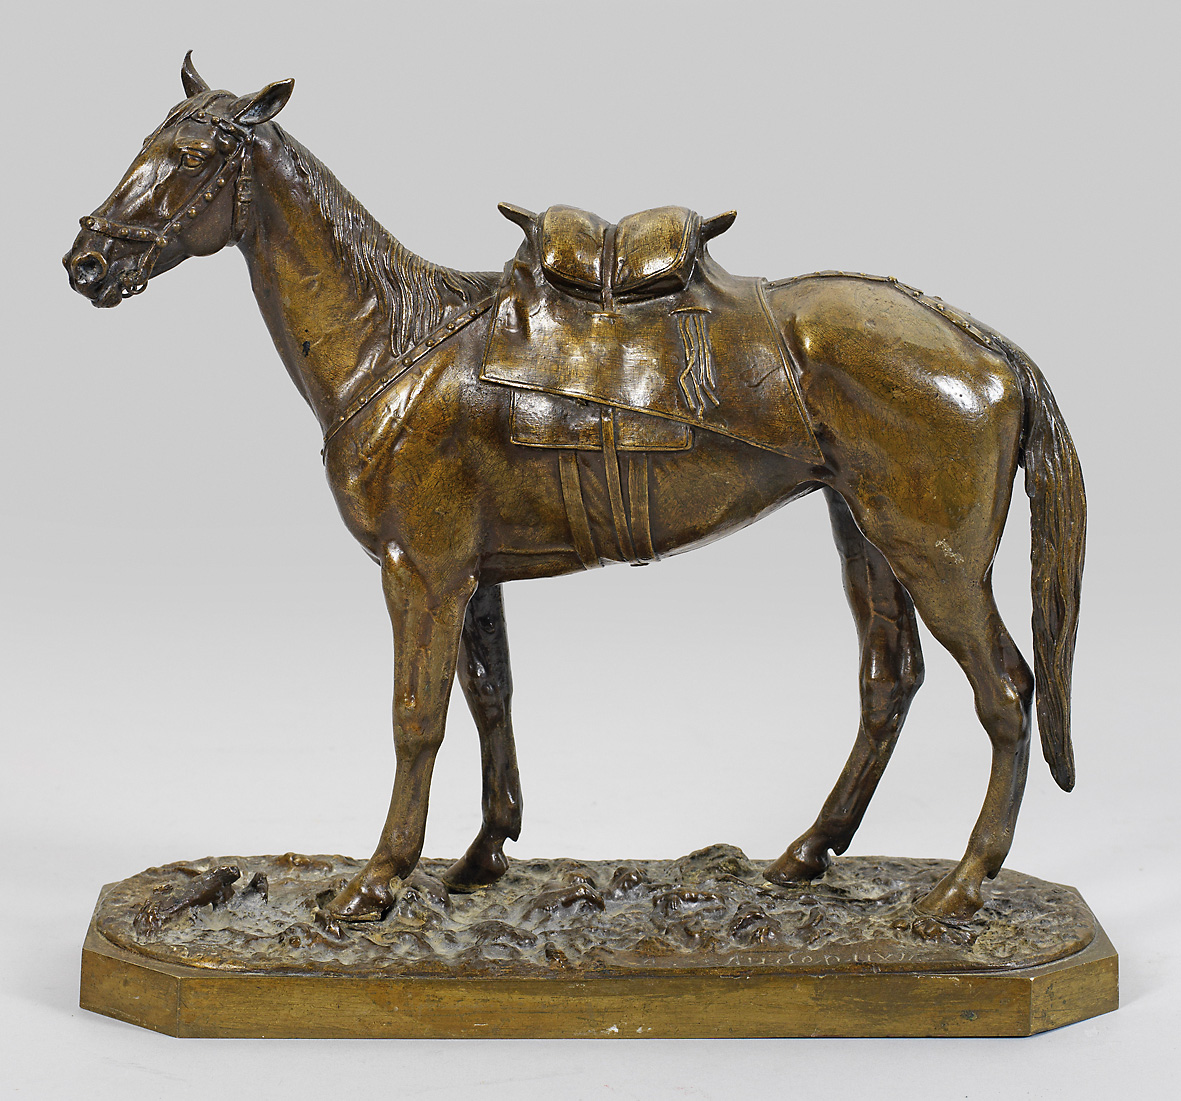 nikolay-ivanovivh-leiberich - Nikolay-Lieberich-Russian-bronze-statue-hunting-horse